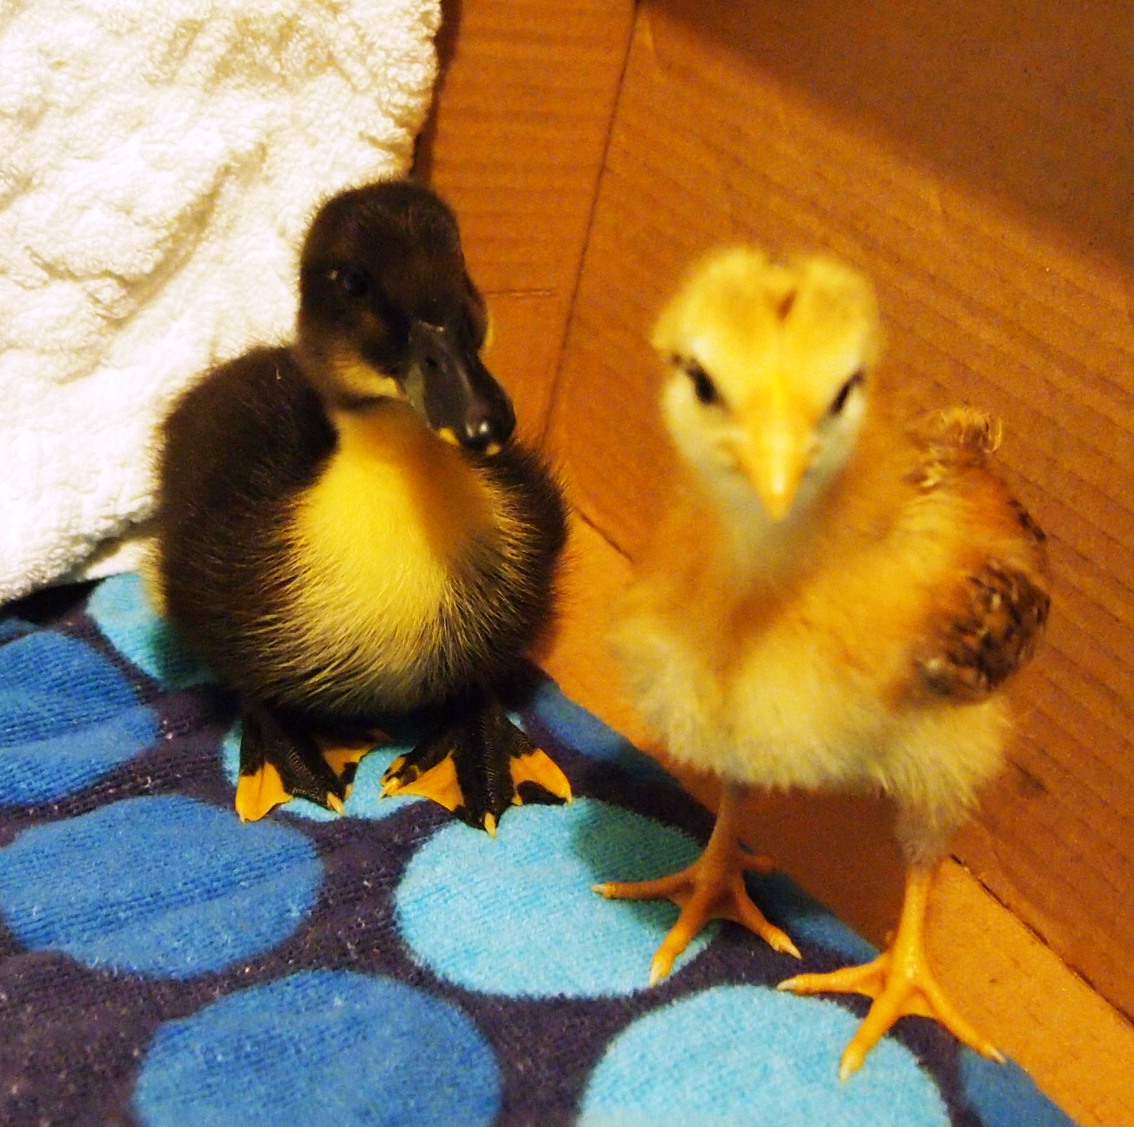 Duck #2 
Chick#4 ee